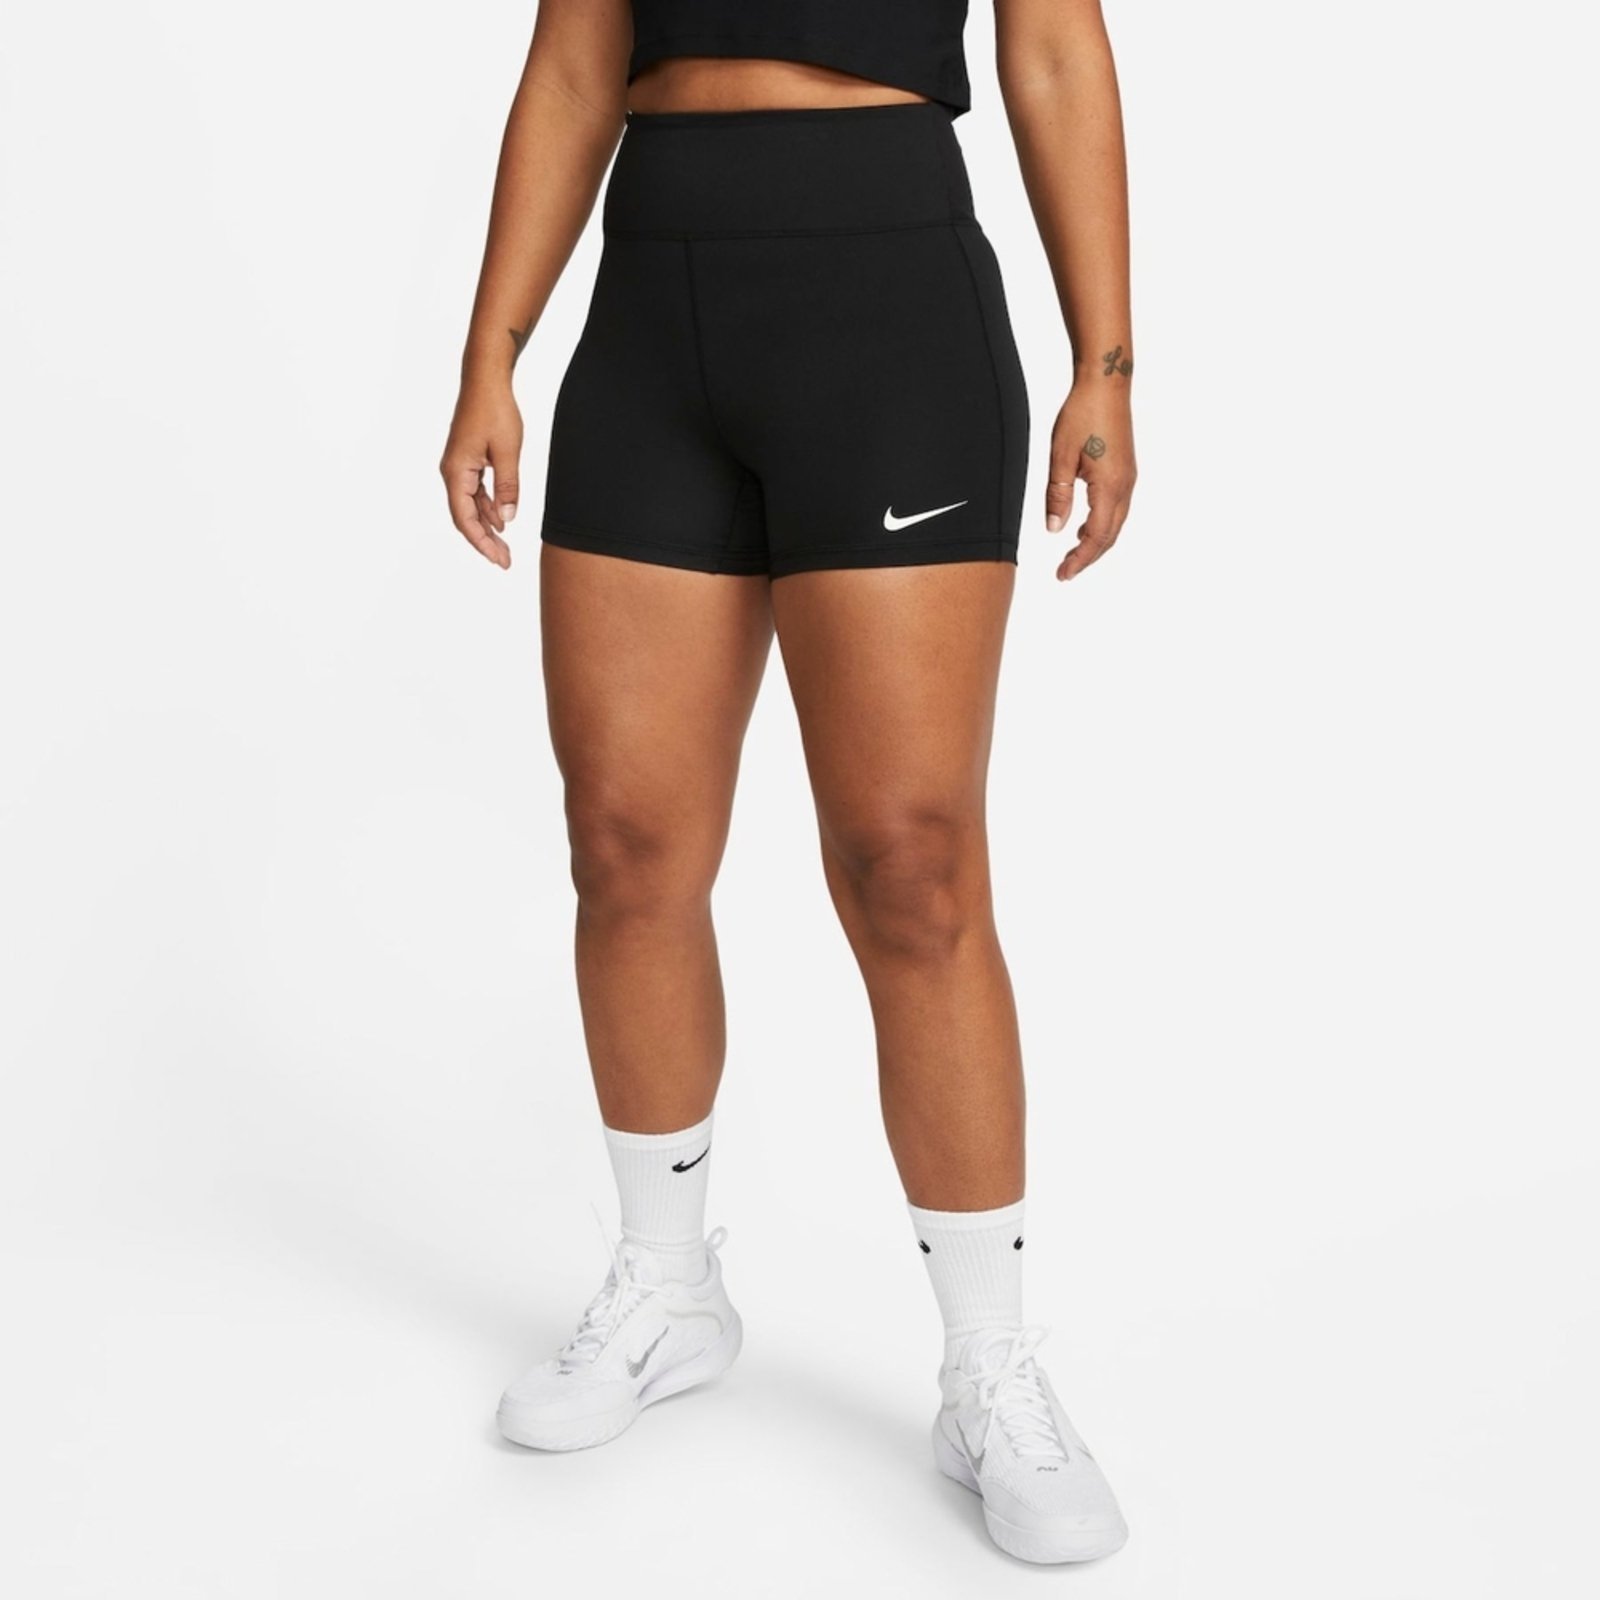 https://static.dafiti.com.br/p/Nike-Shorts-Nike-Dri-FIT-Advantage-Feminino-2718-24730031-1-zoom.jpg